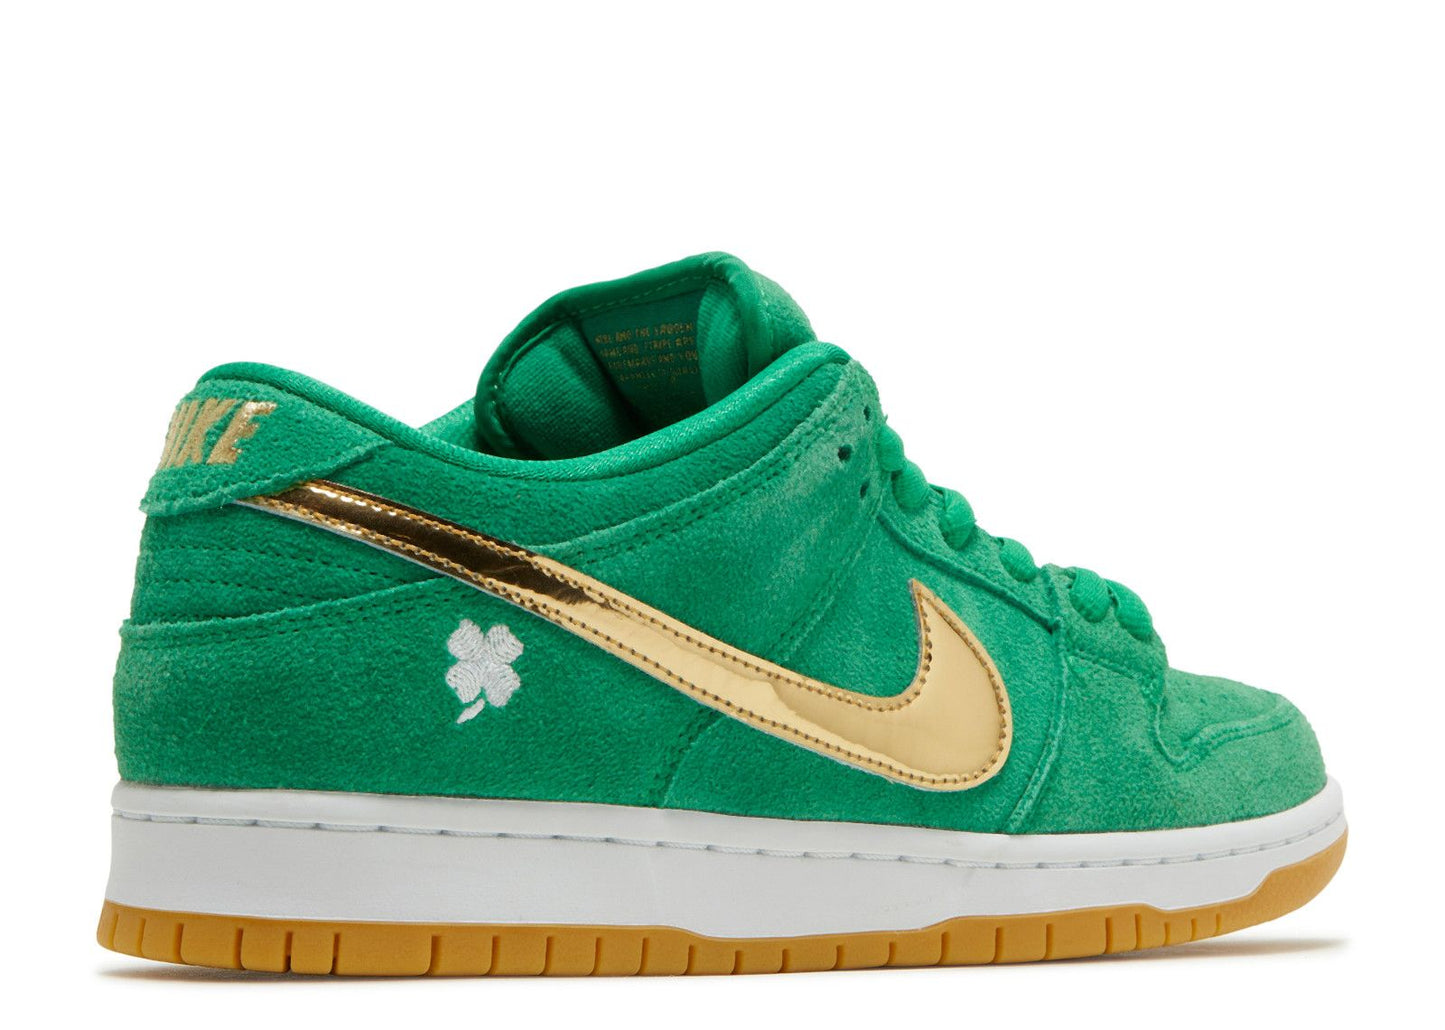 Nike SB Dunk Low Pro "St. Patrick's Day" 2022